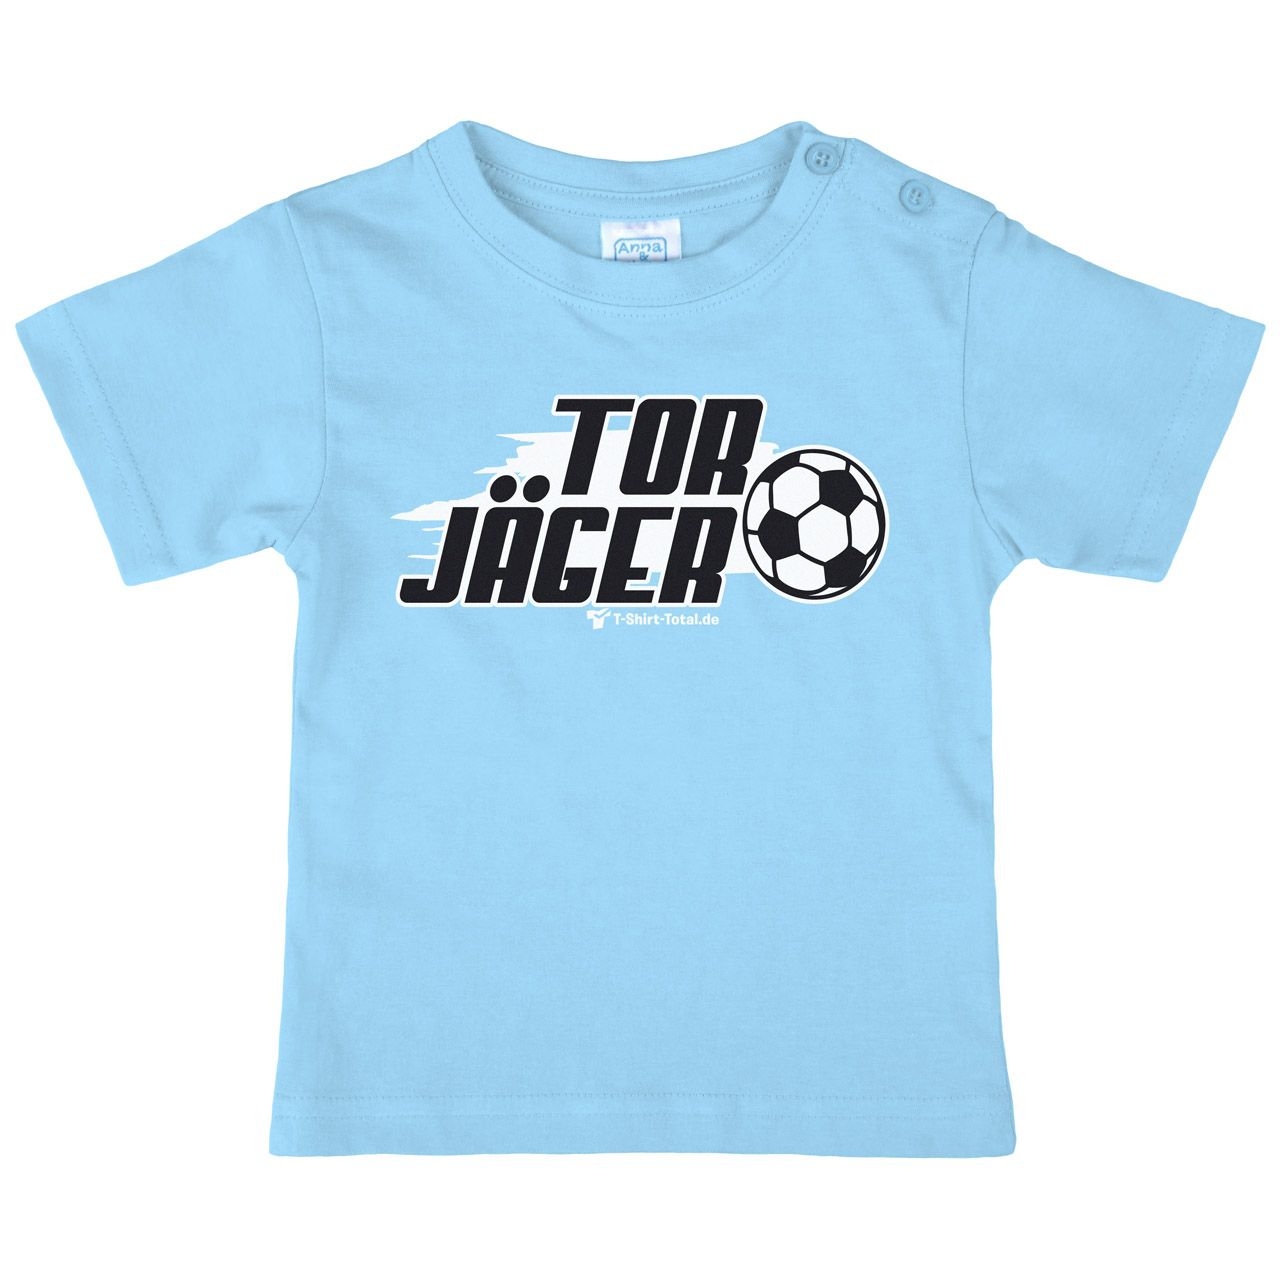 Torjäger Kinder T-Shirt hellblau 110 / 116